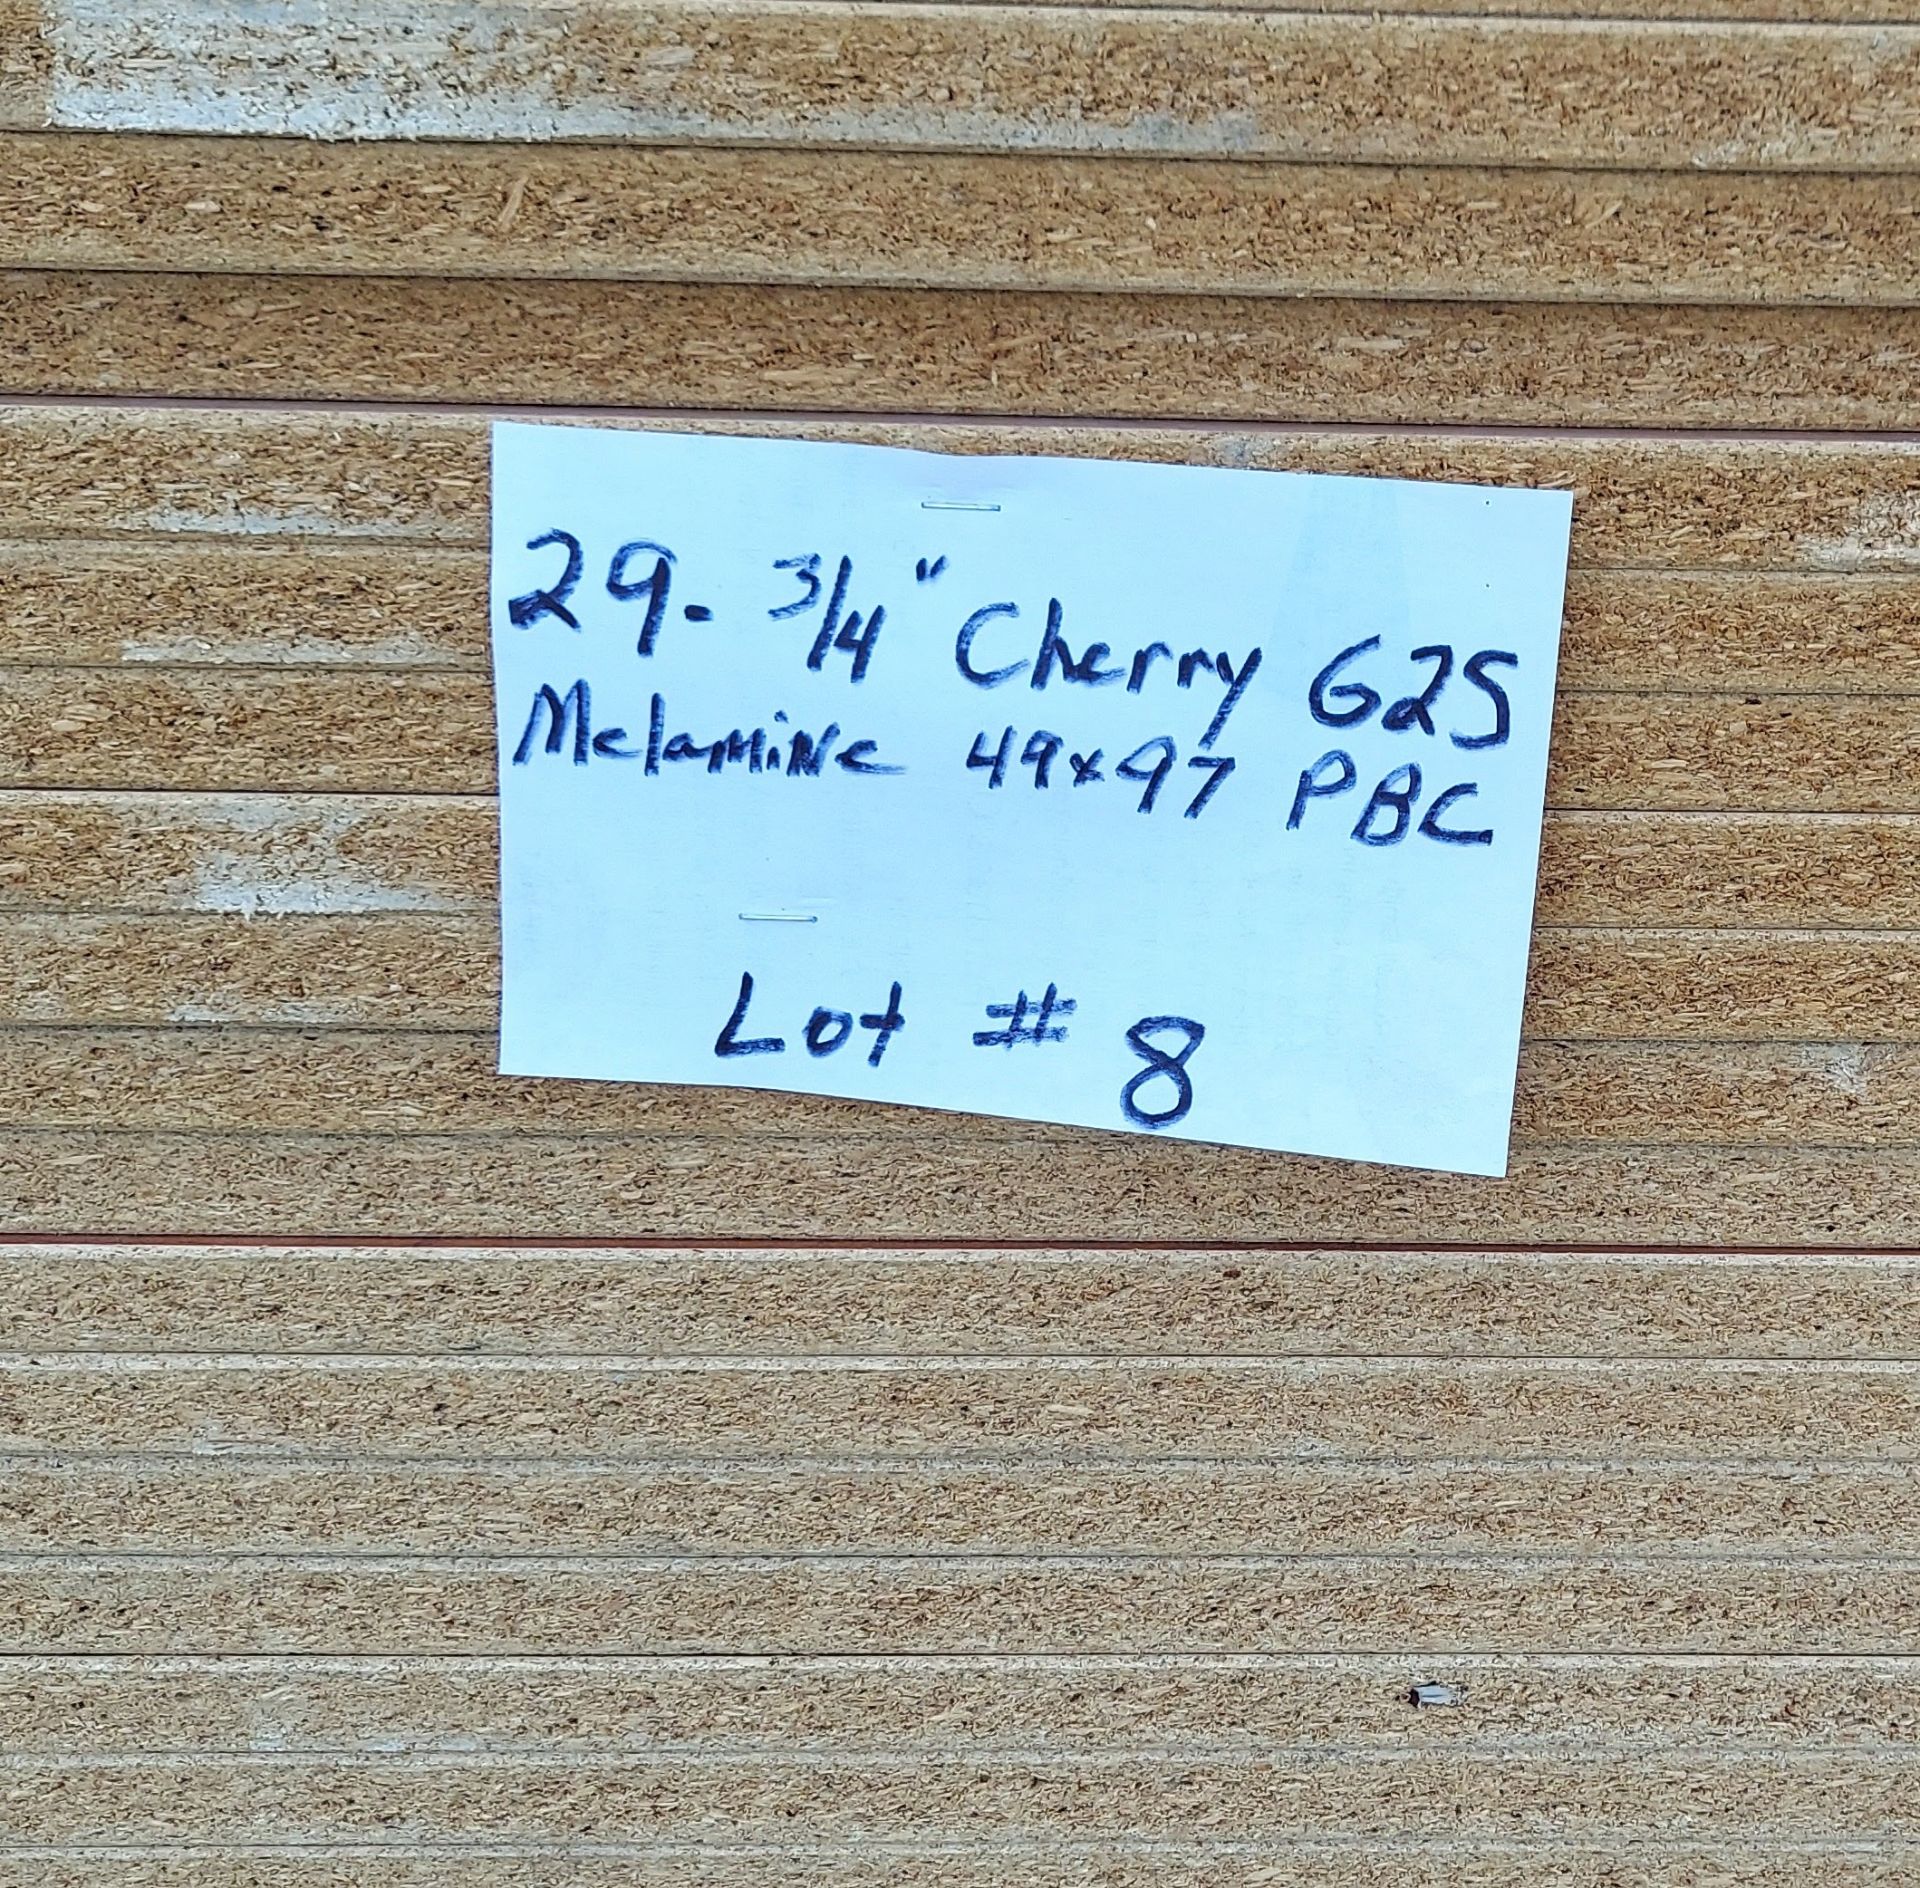 29 Sheets - 3/4" Cherry G2S Melamine 49" X 97" PBC - Image 5 of 5